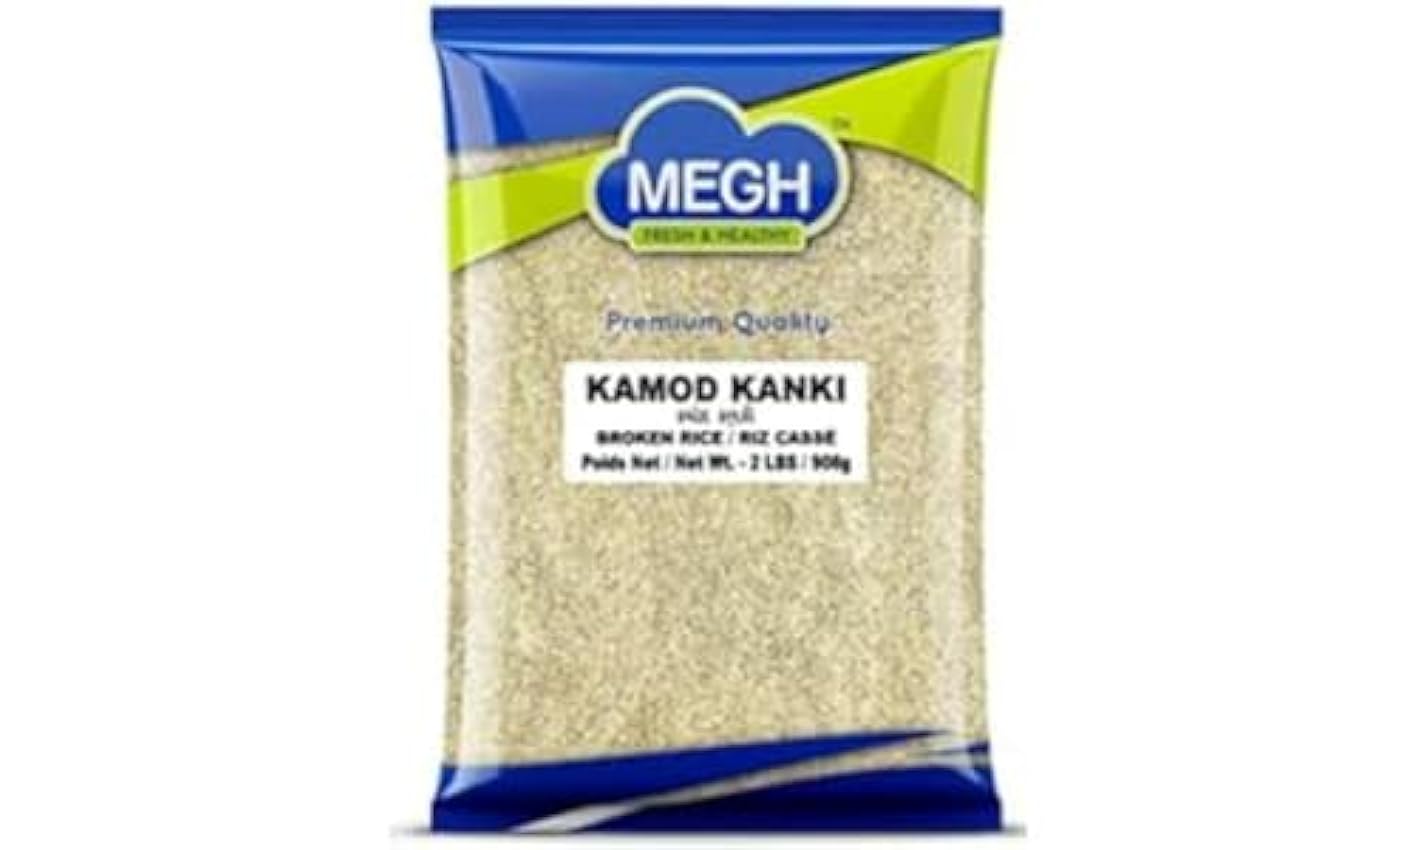 Megh Kamod Kanki(Broken Rice) 2Ib pLYGlVMW